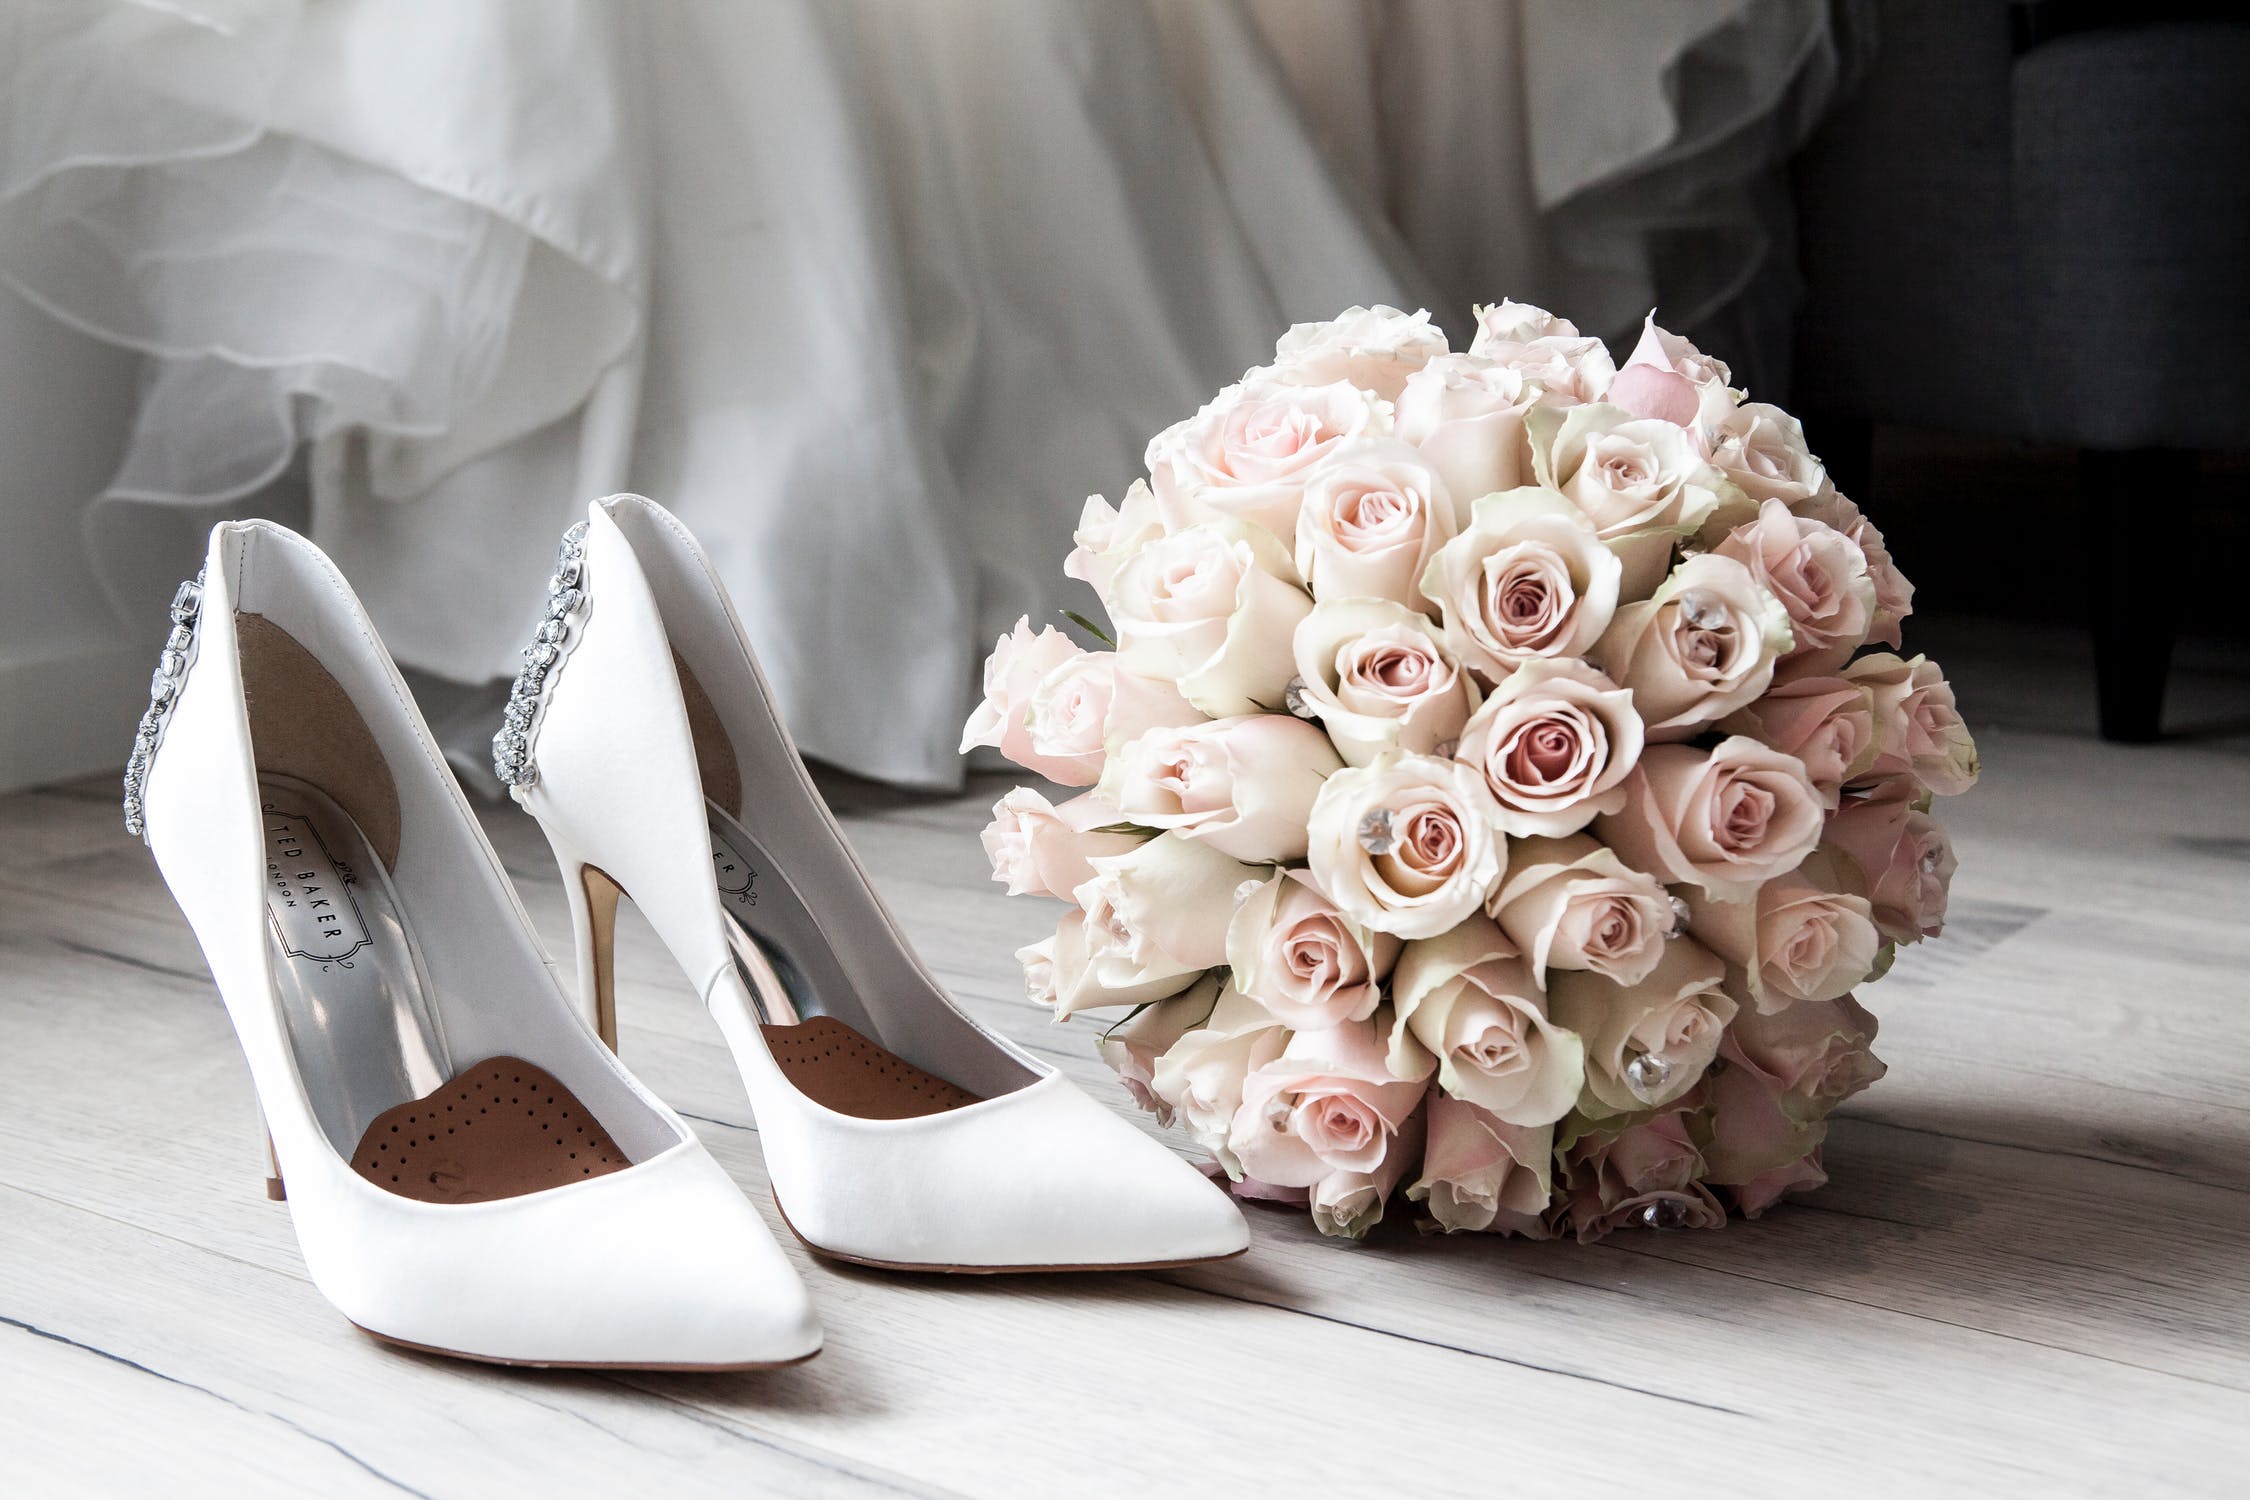 Bridal shop | Source: Pixabay